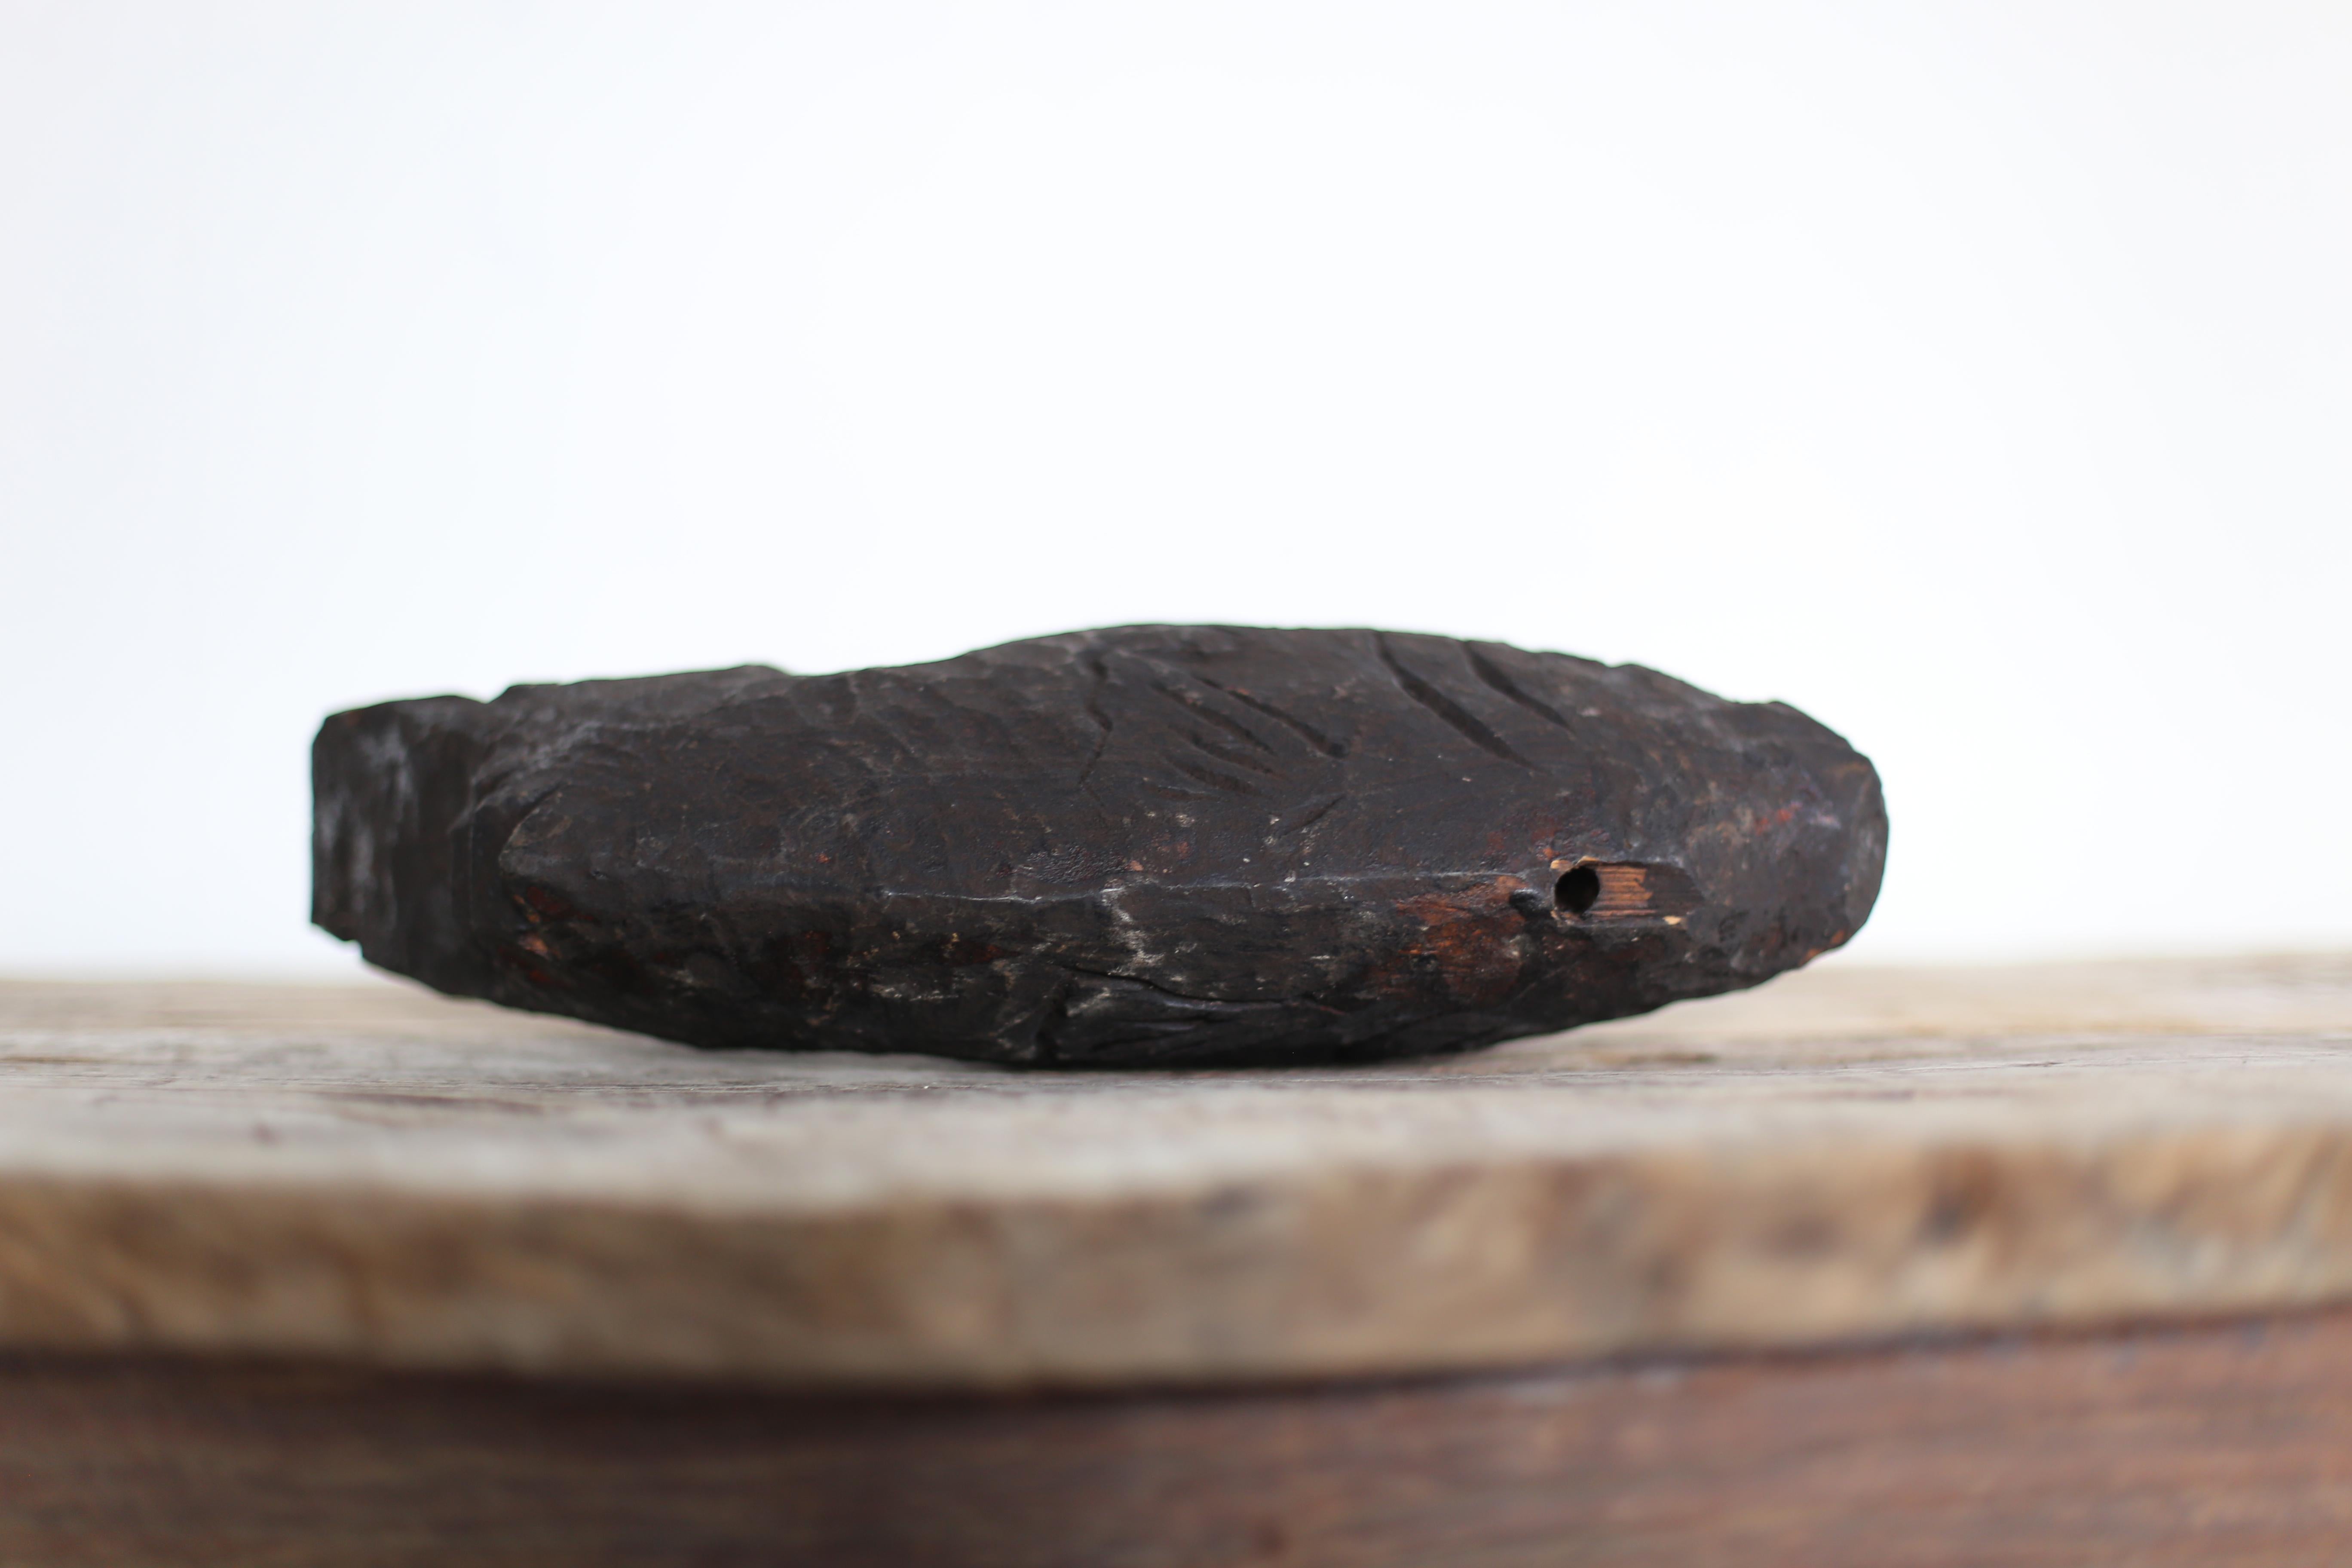 Cedar Japanese Antique Wood Carving Fish 1860s-1900s / Mingei Figurine Object Wabisabi For Sale